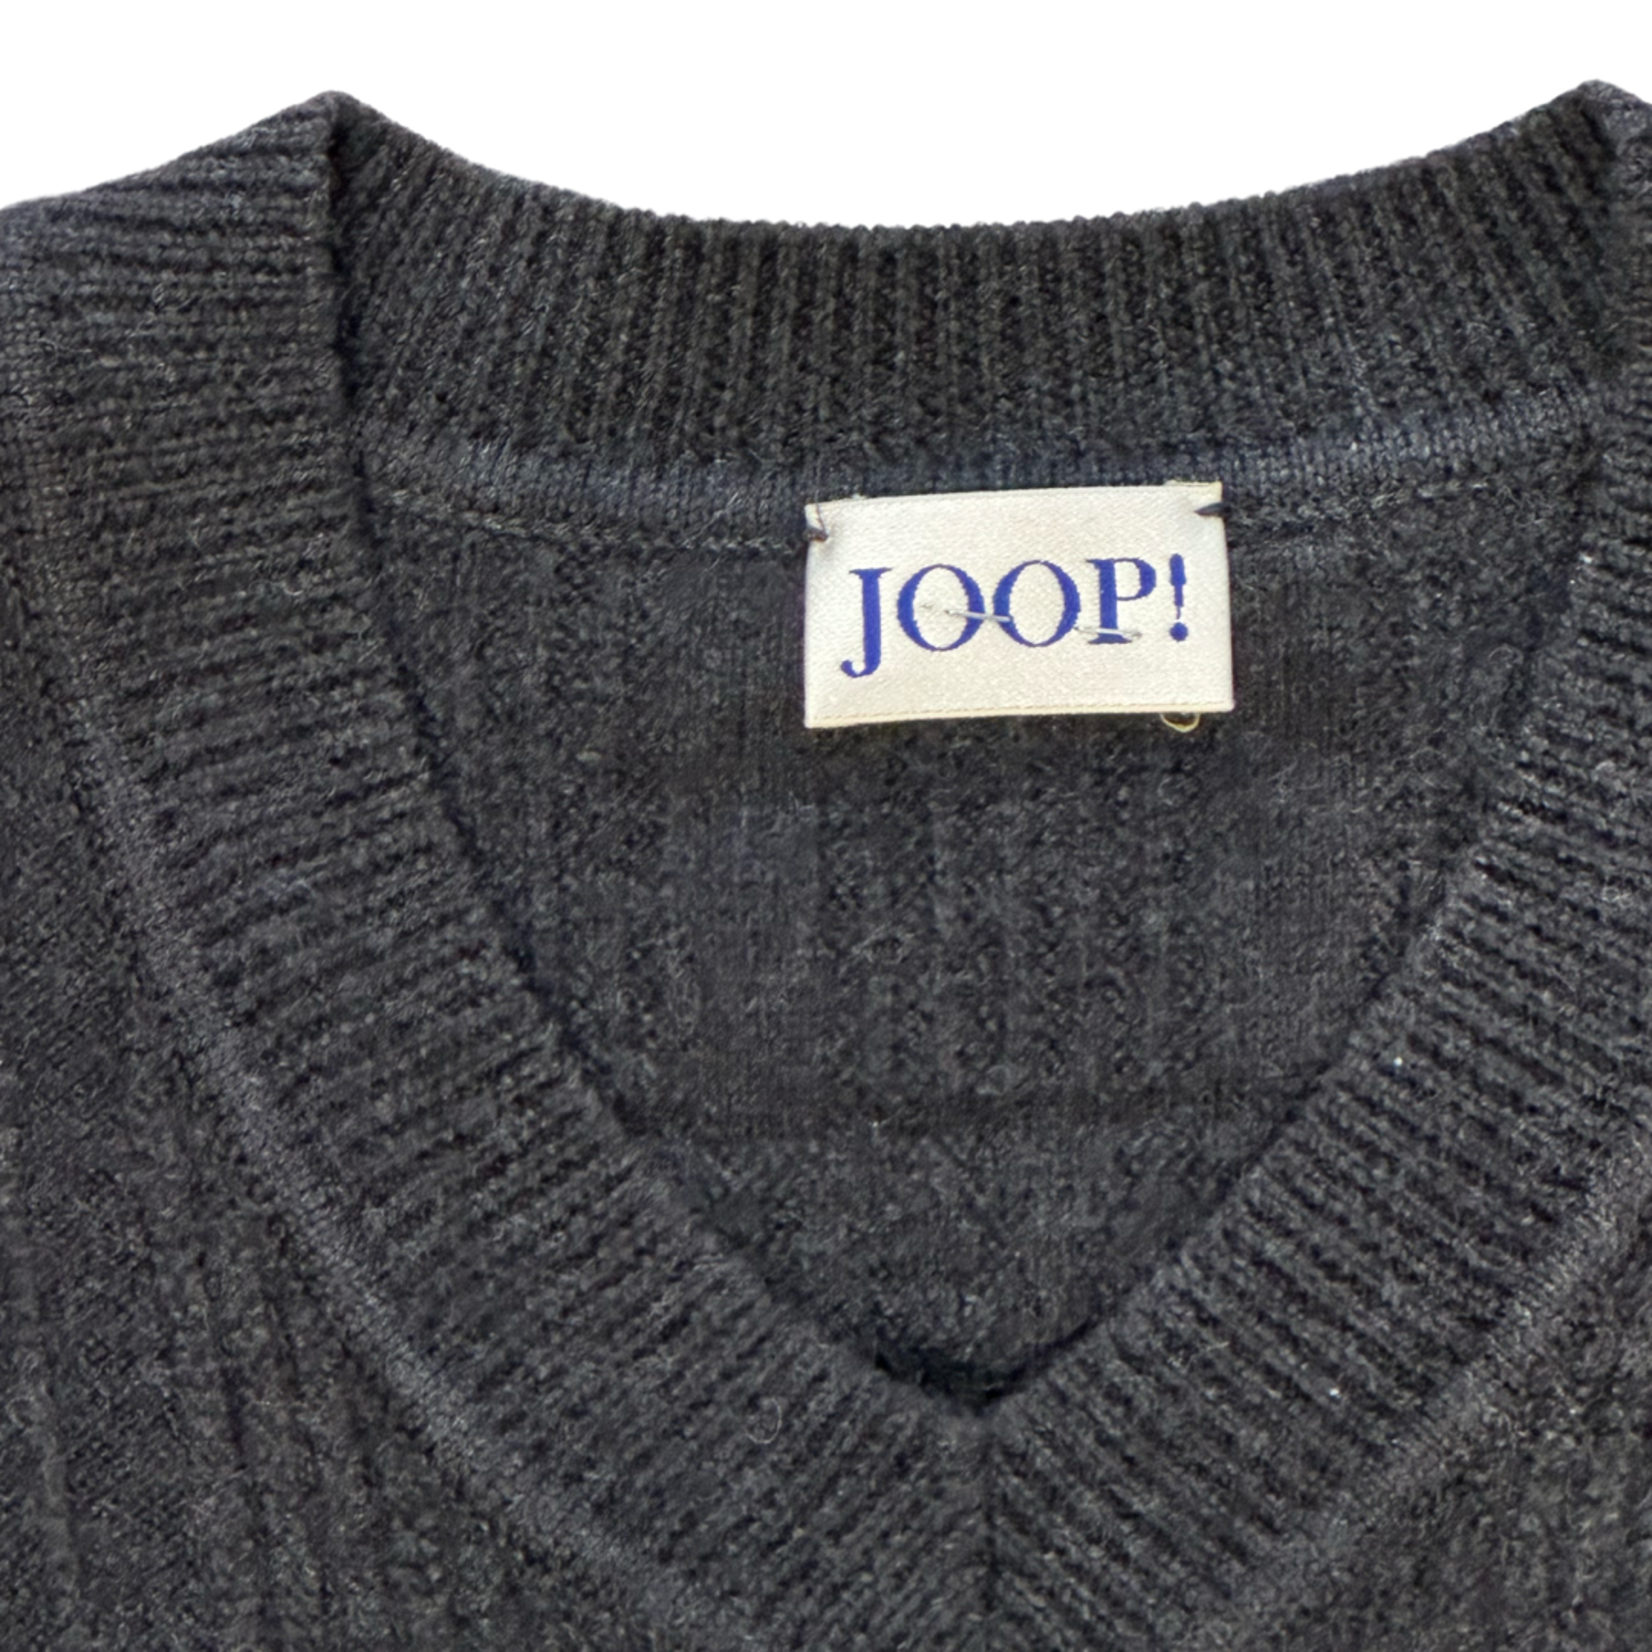 Vintage Vintage JOOP! sweater size L